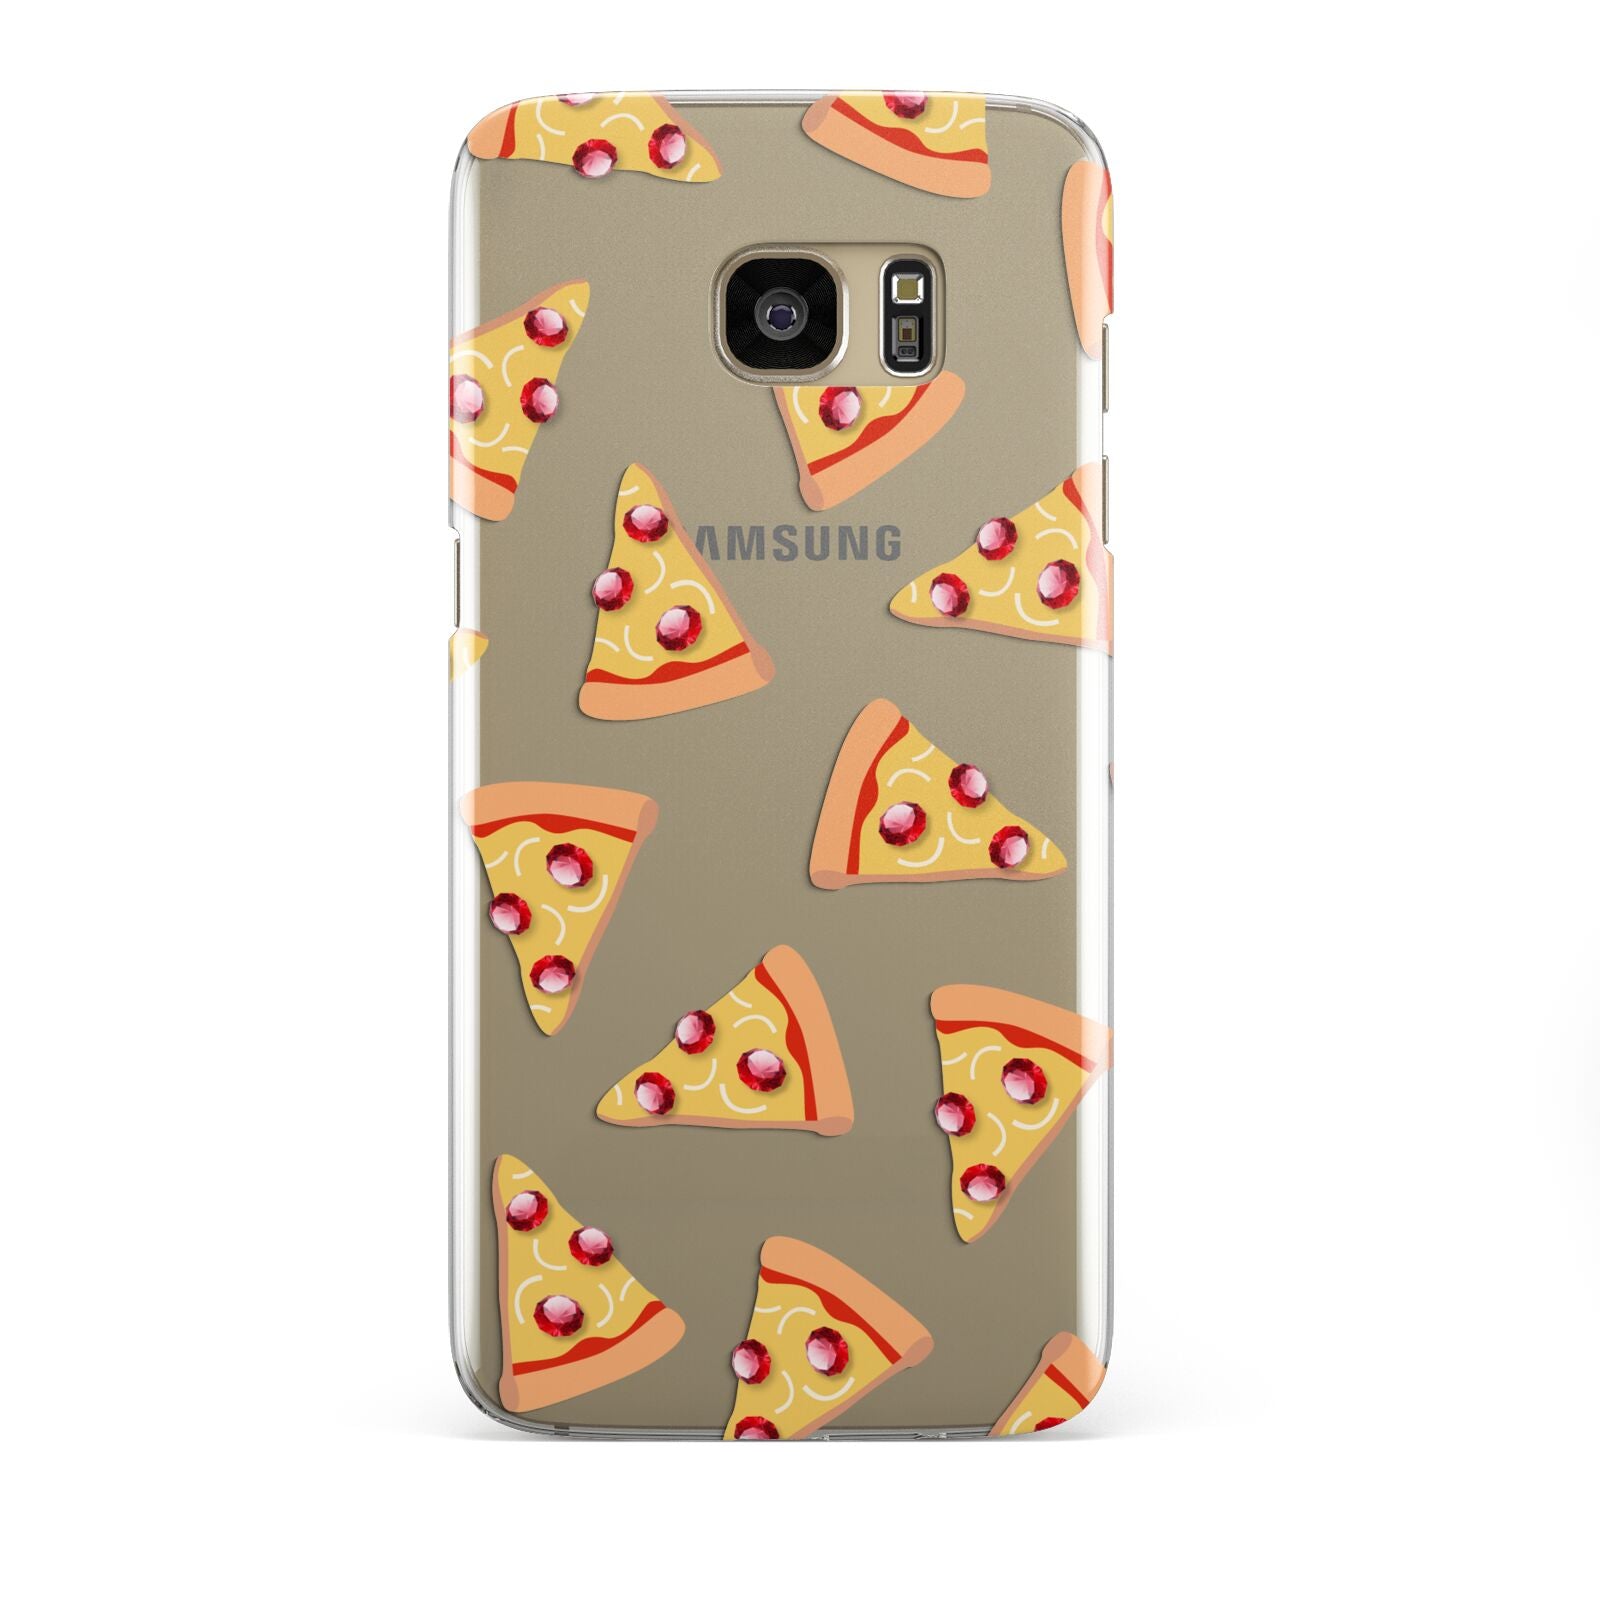 Rubies on Cartoon Pizza Slices Samsung Galaxy S7 Edge Case